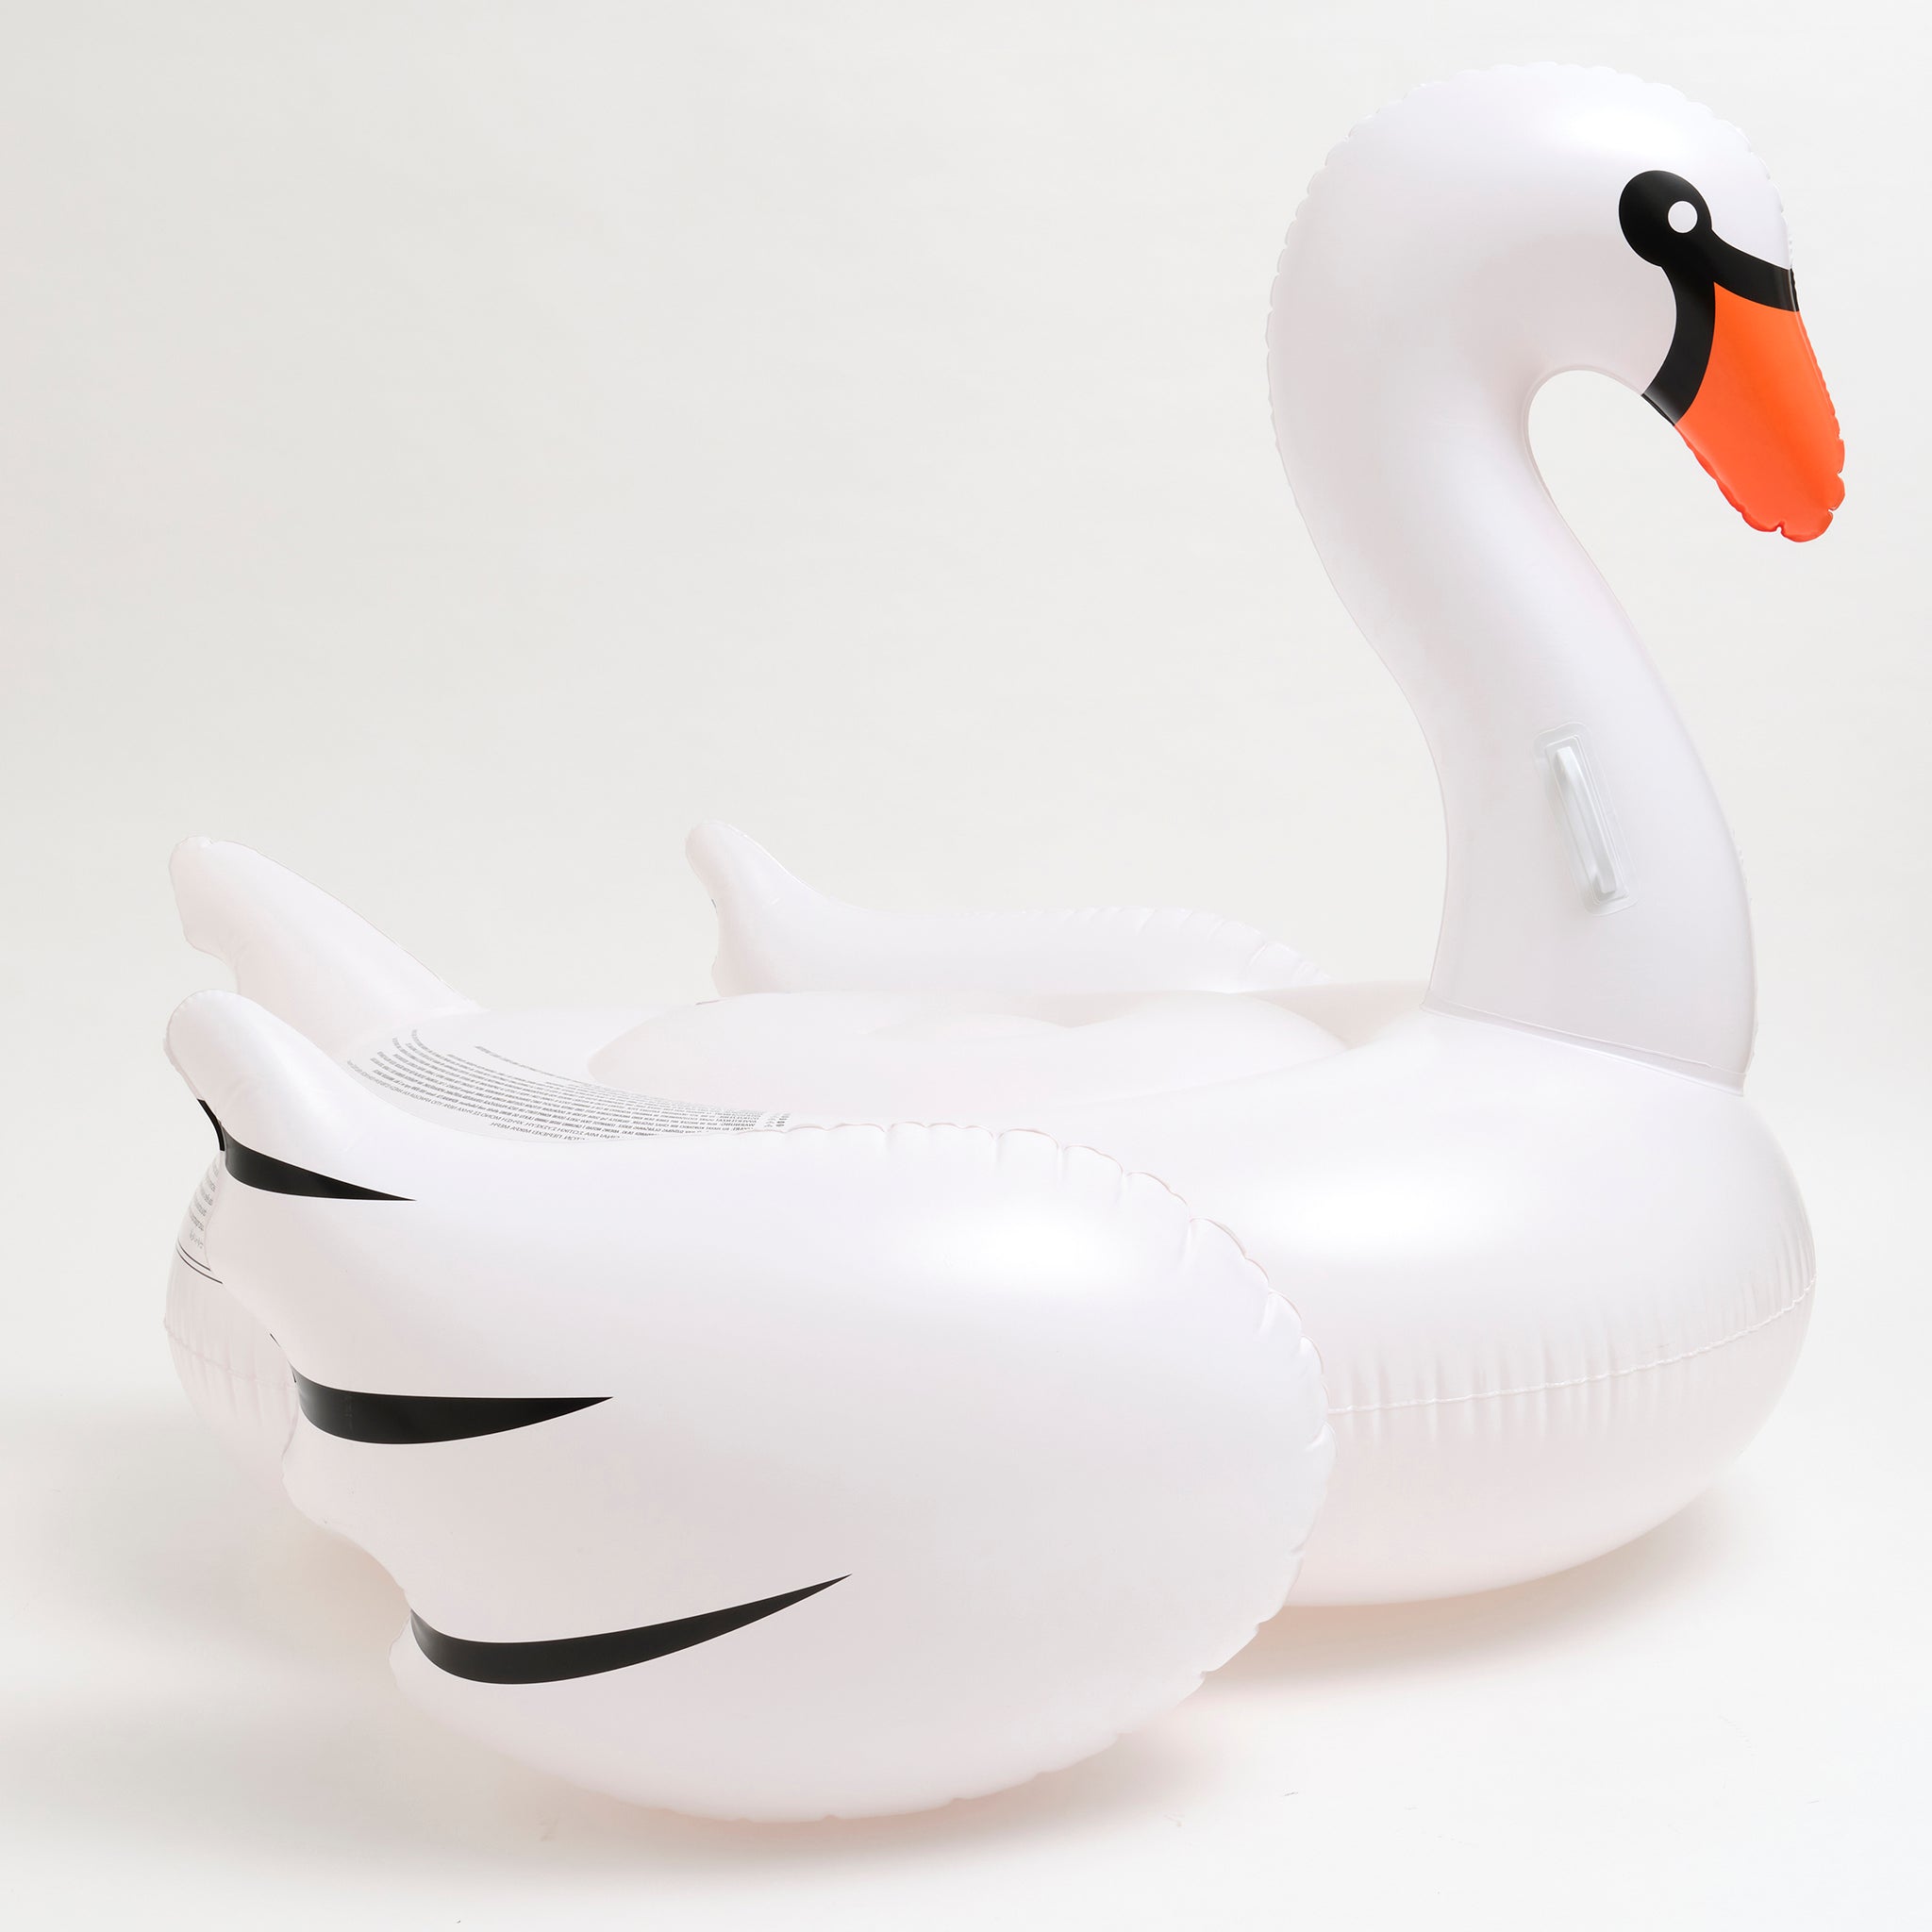 SUNNYLiFE |Luxe Ride-On Float | Swan